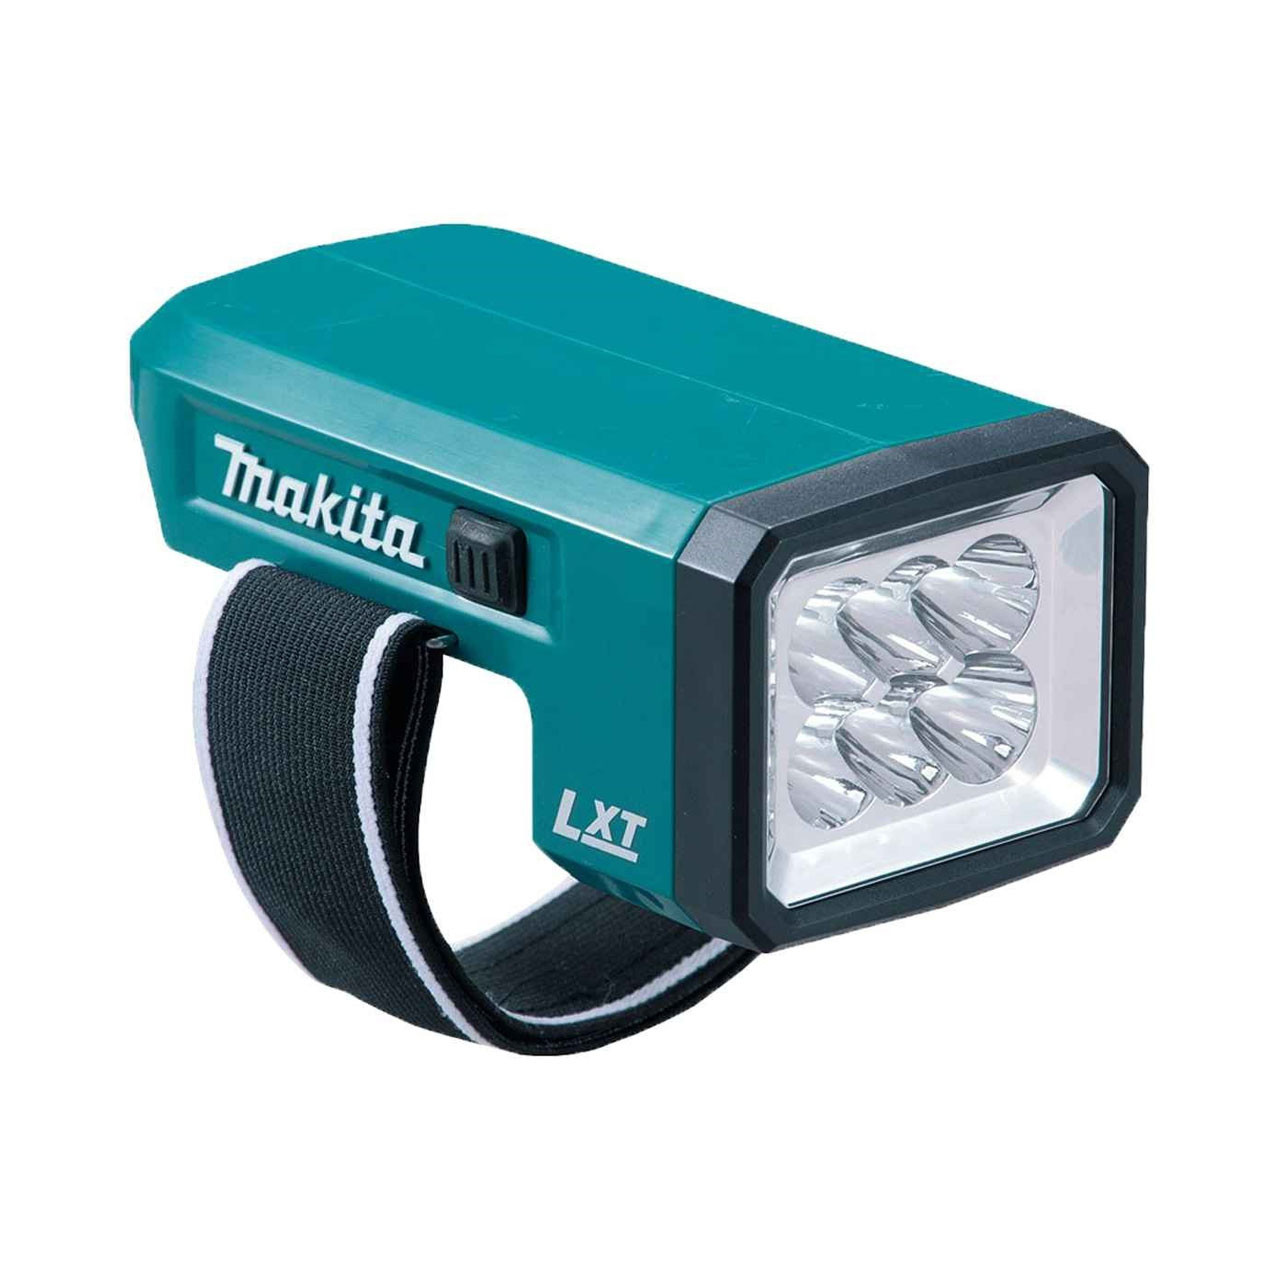 Makita cordless LED inspection light